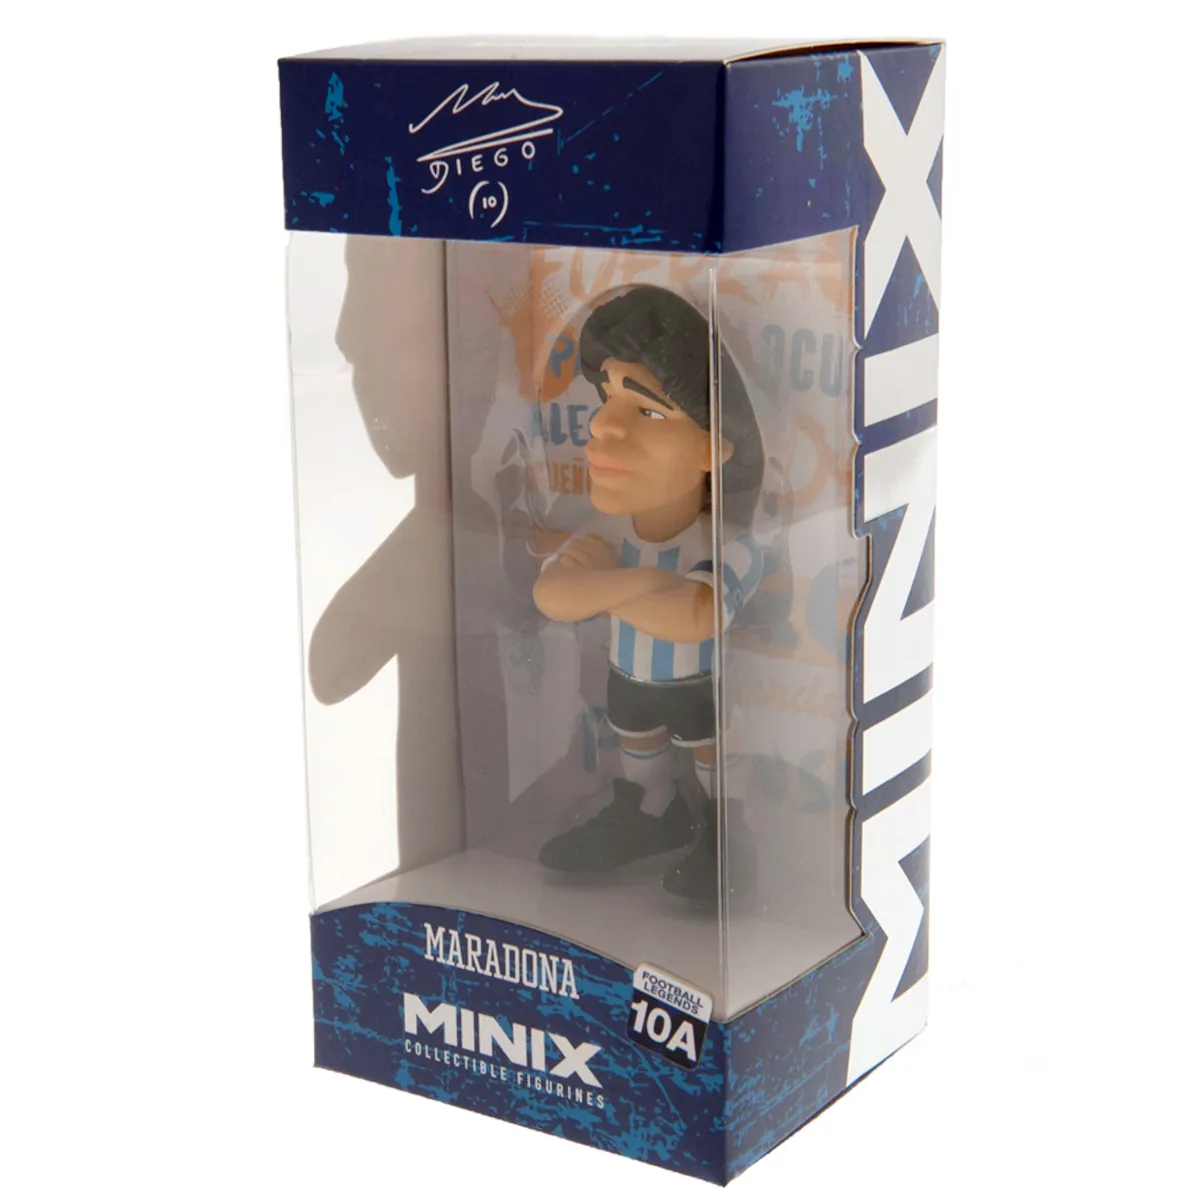 Diego Armando Maradona - Minix Colectible Figurines